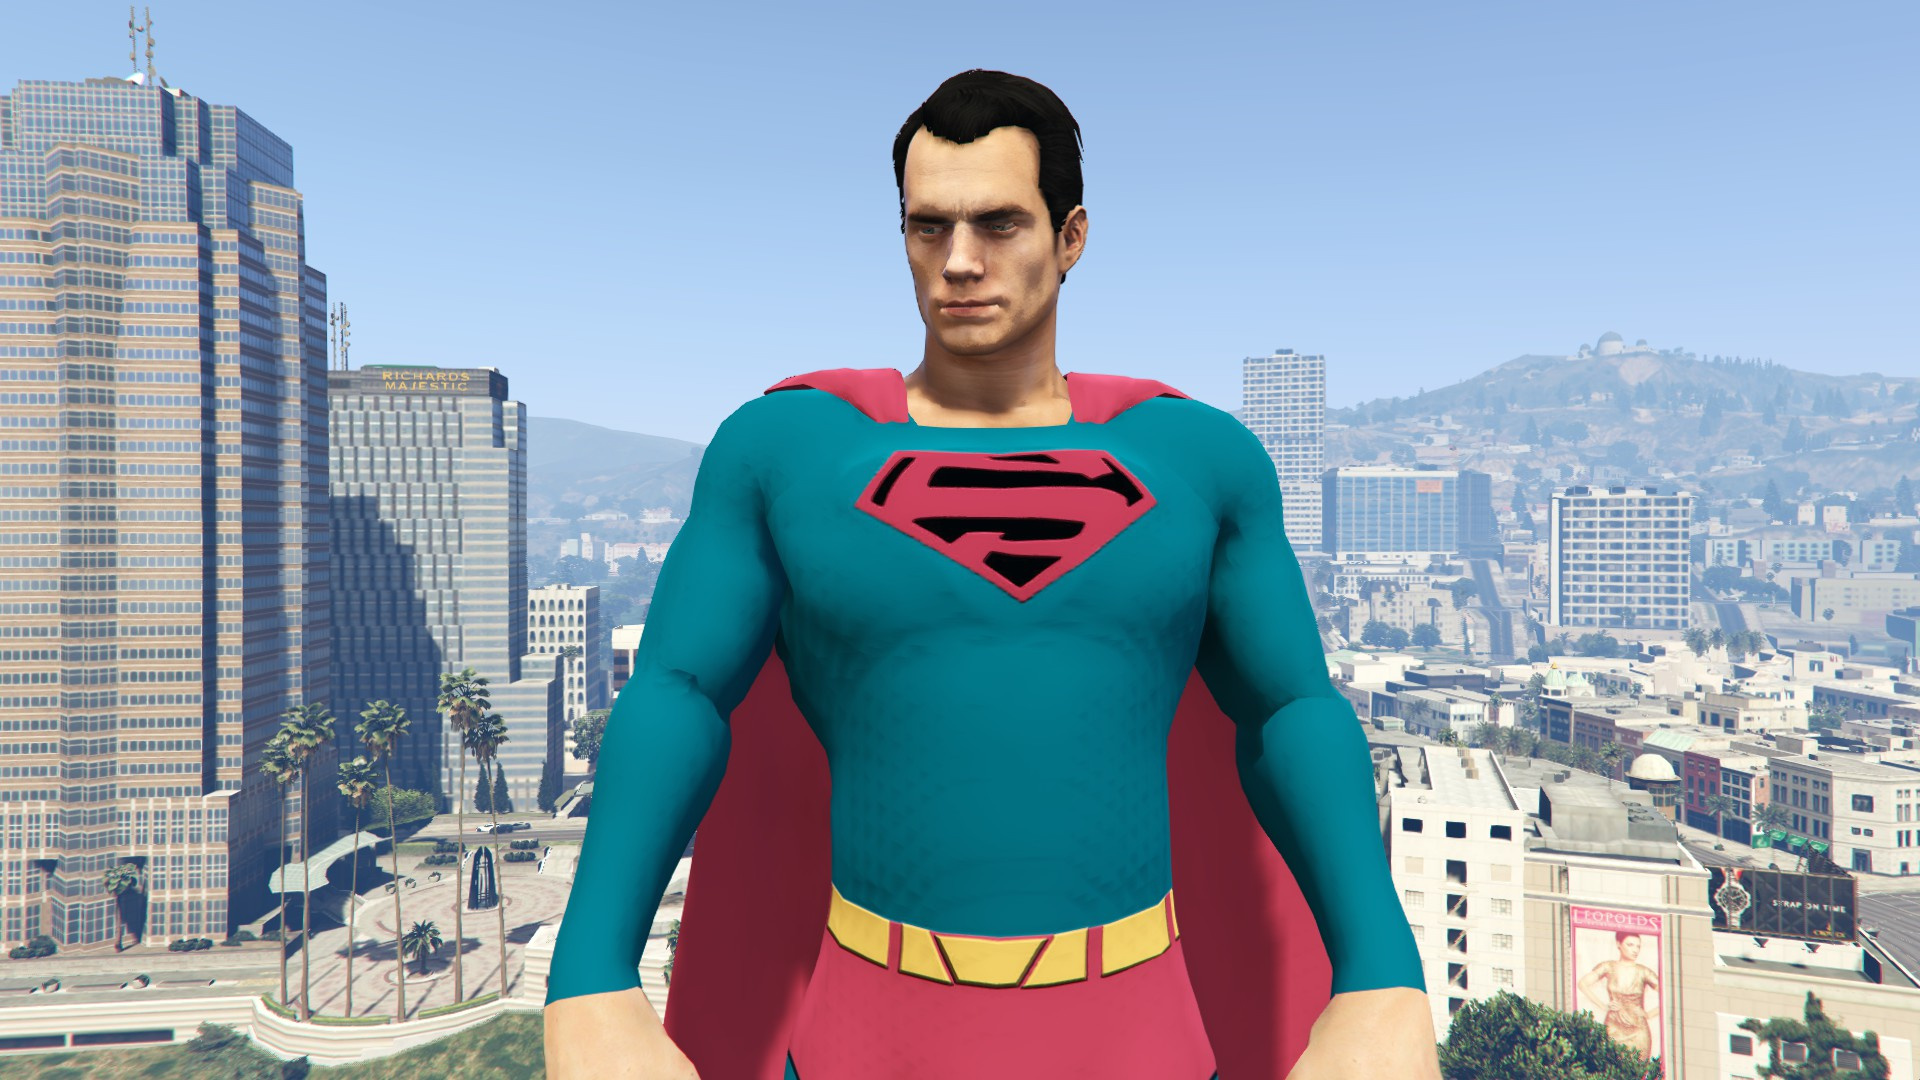 gta 5 superman mod in space